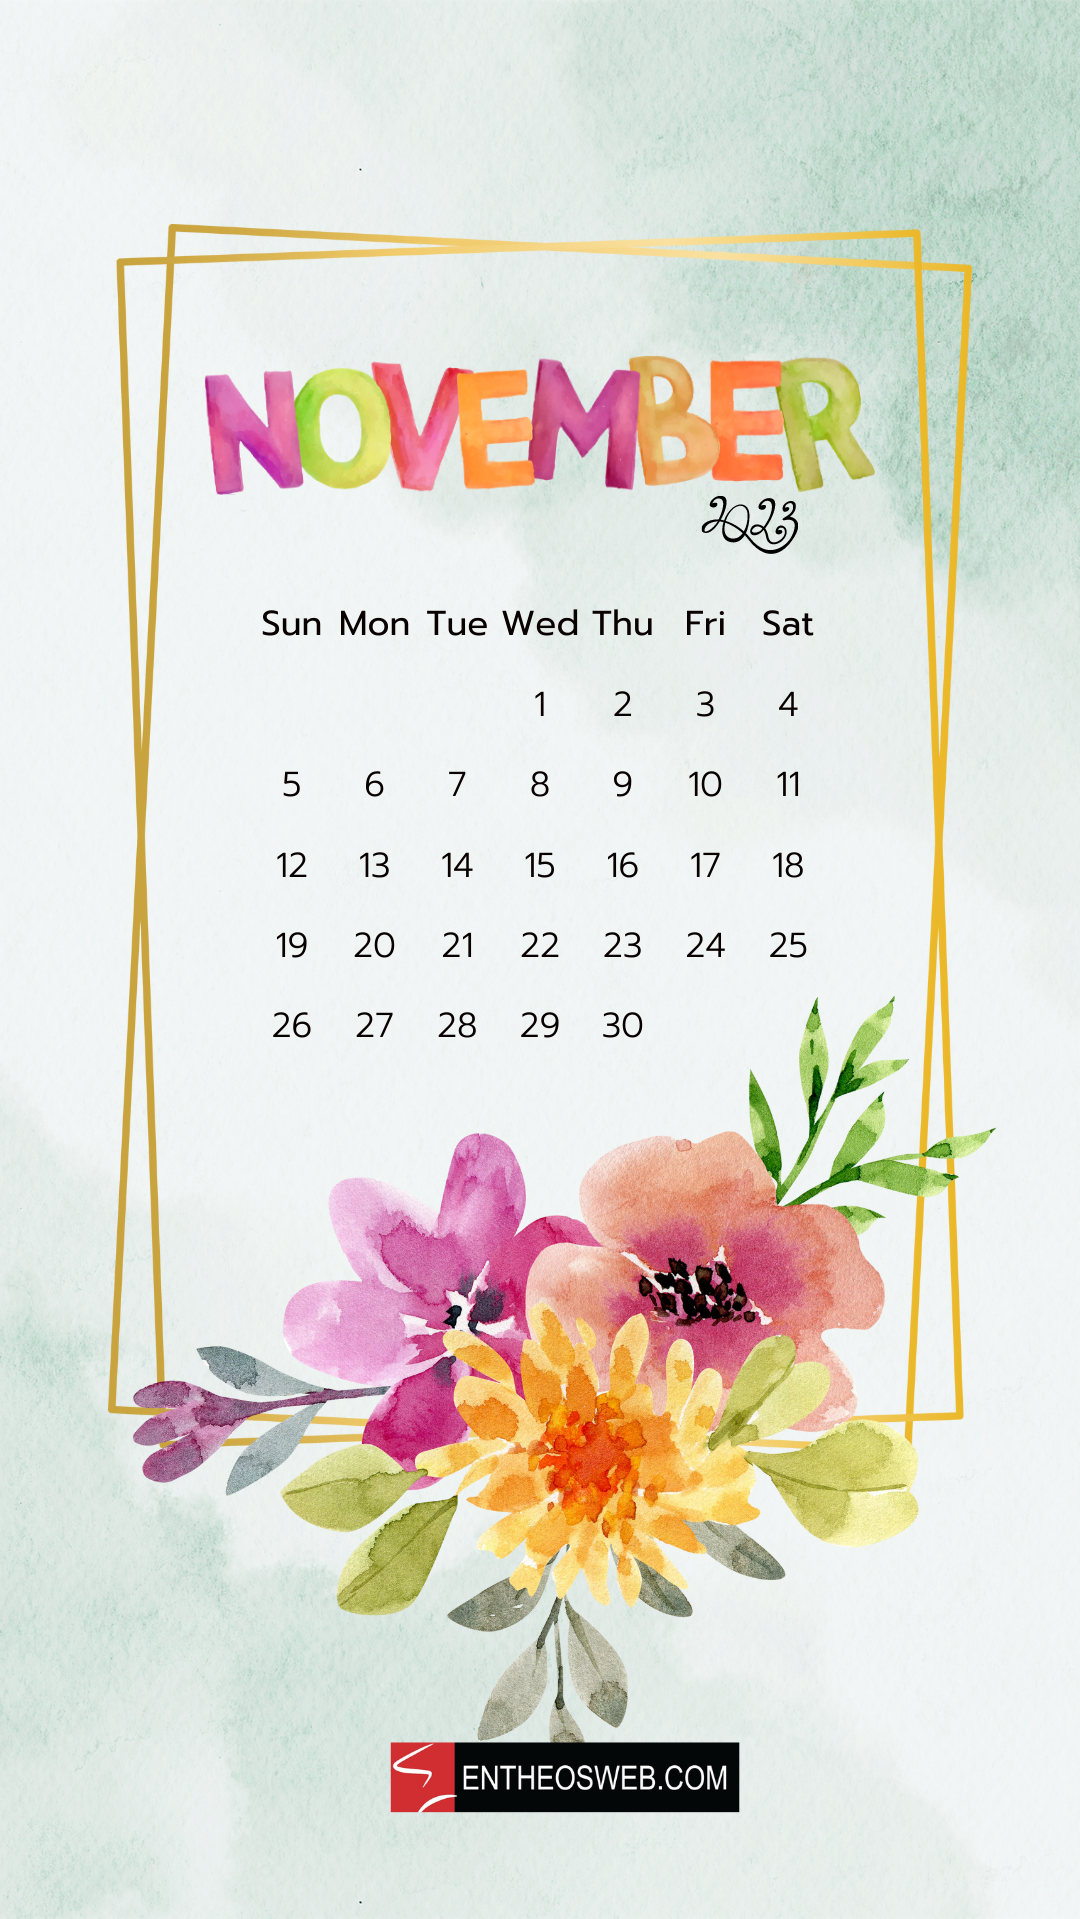 November Calendar Phone Wallpaper Entheosweb